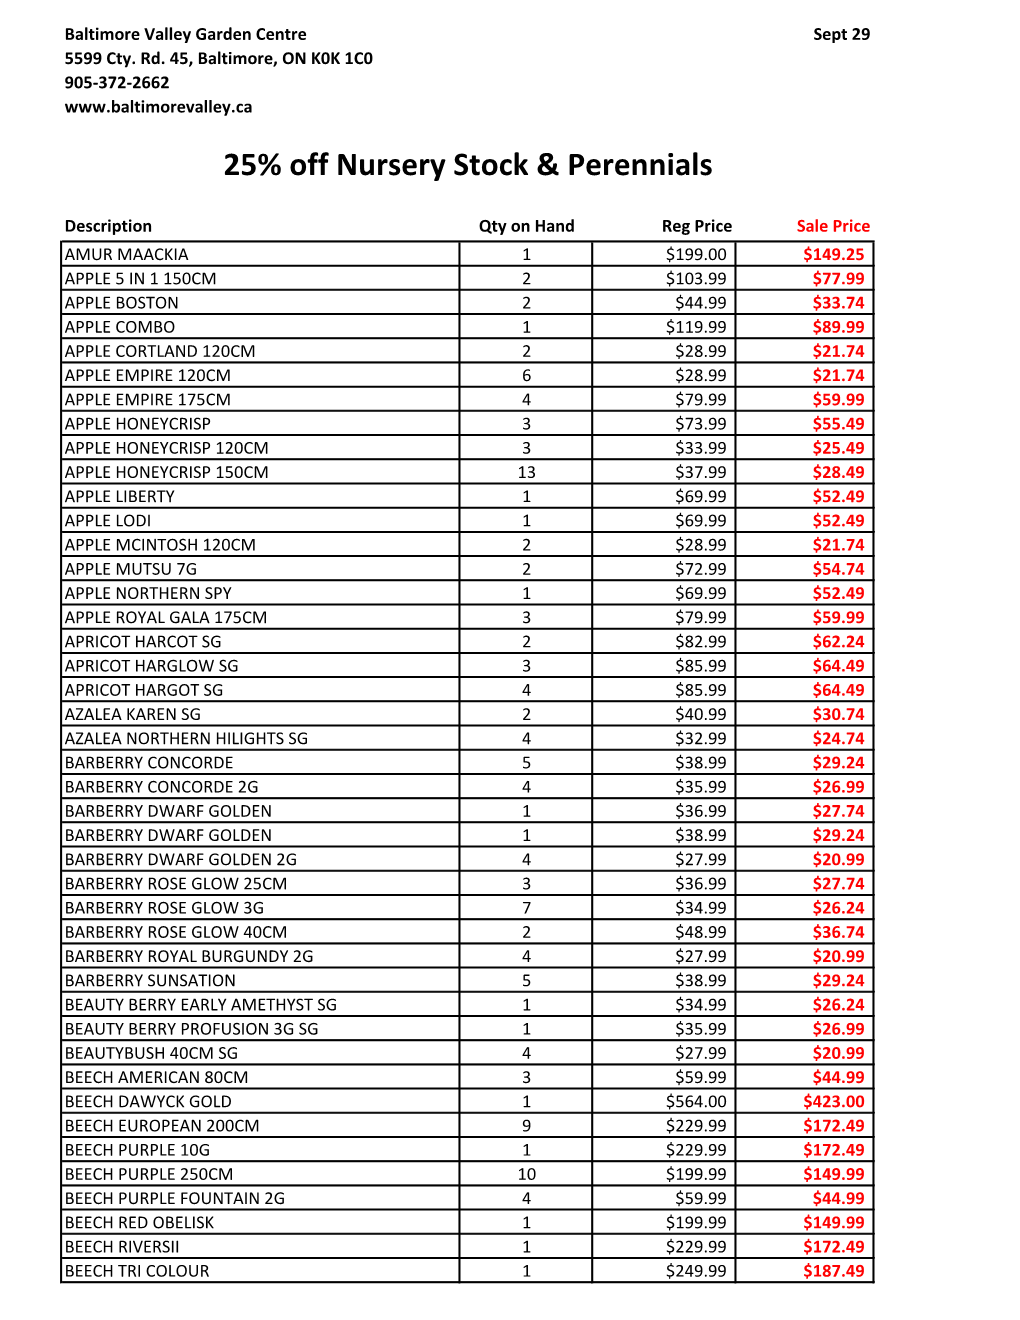 25% Off Nursery Stock & Perennials